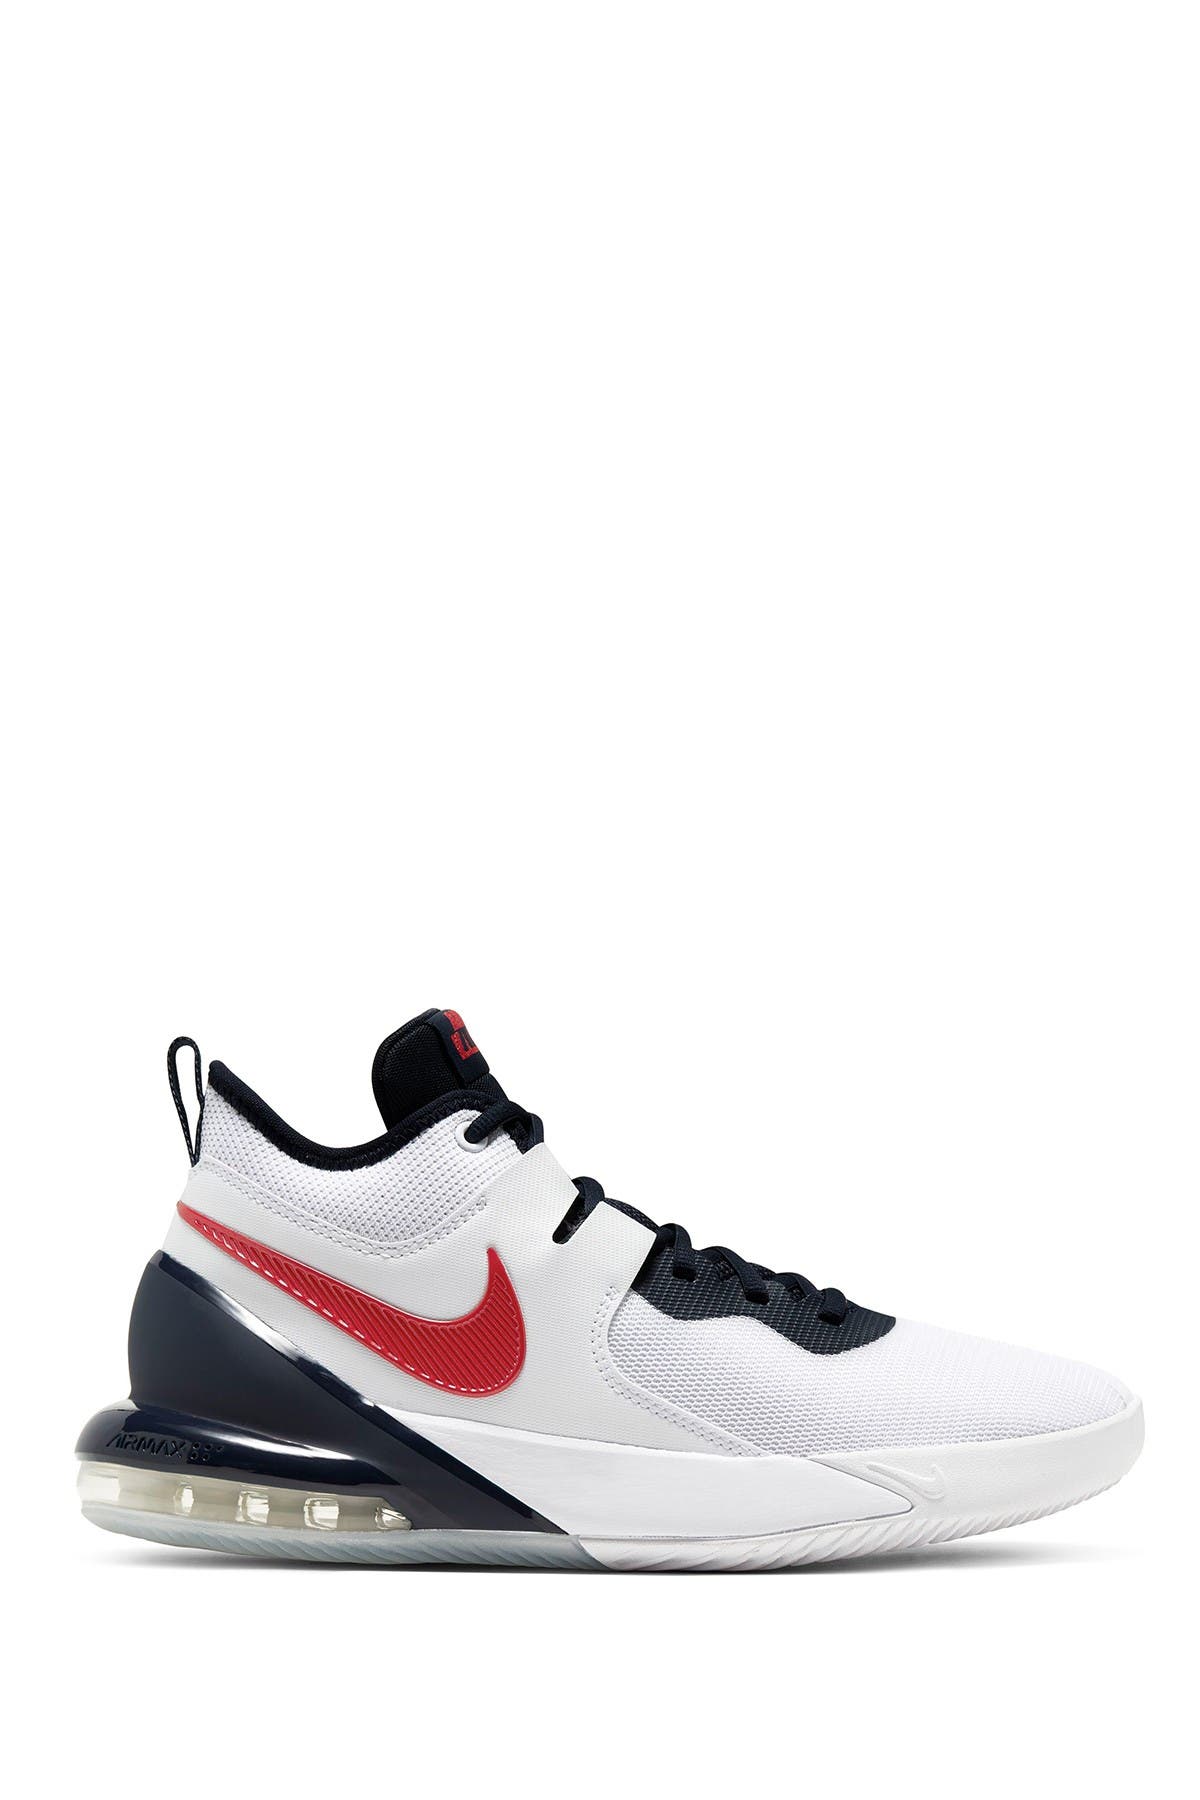 Nike | Air Max Impact Basketball Shoe 